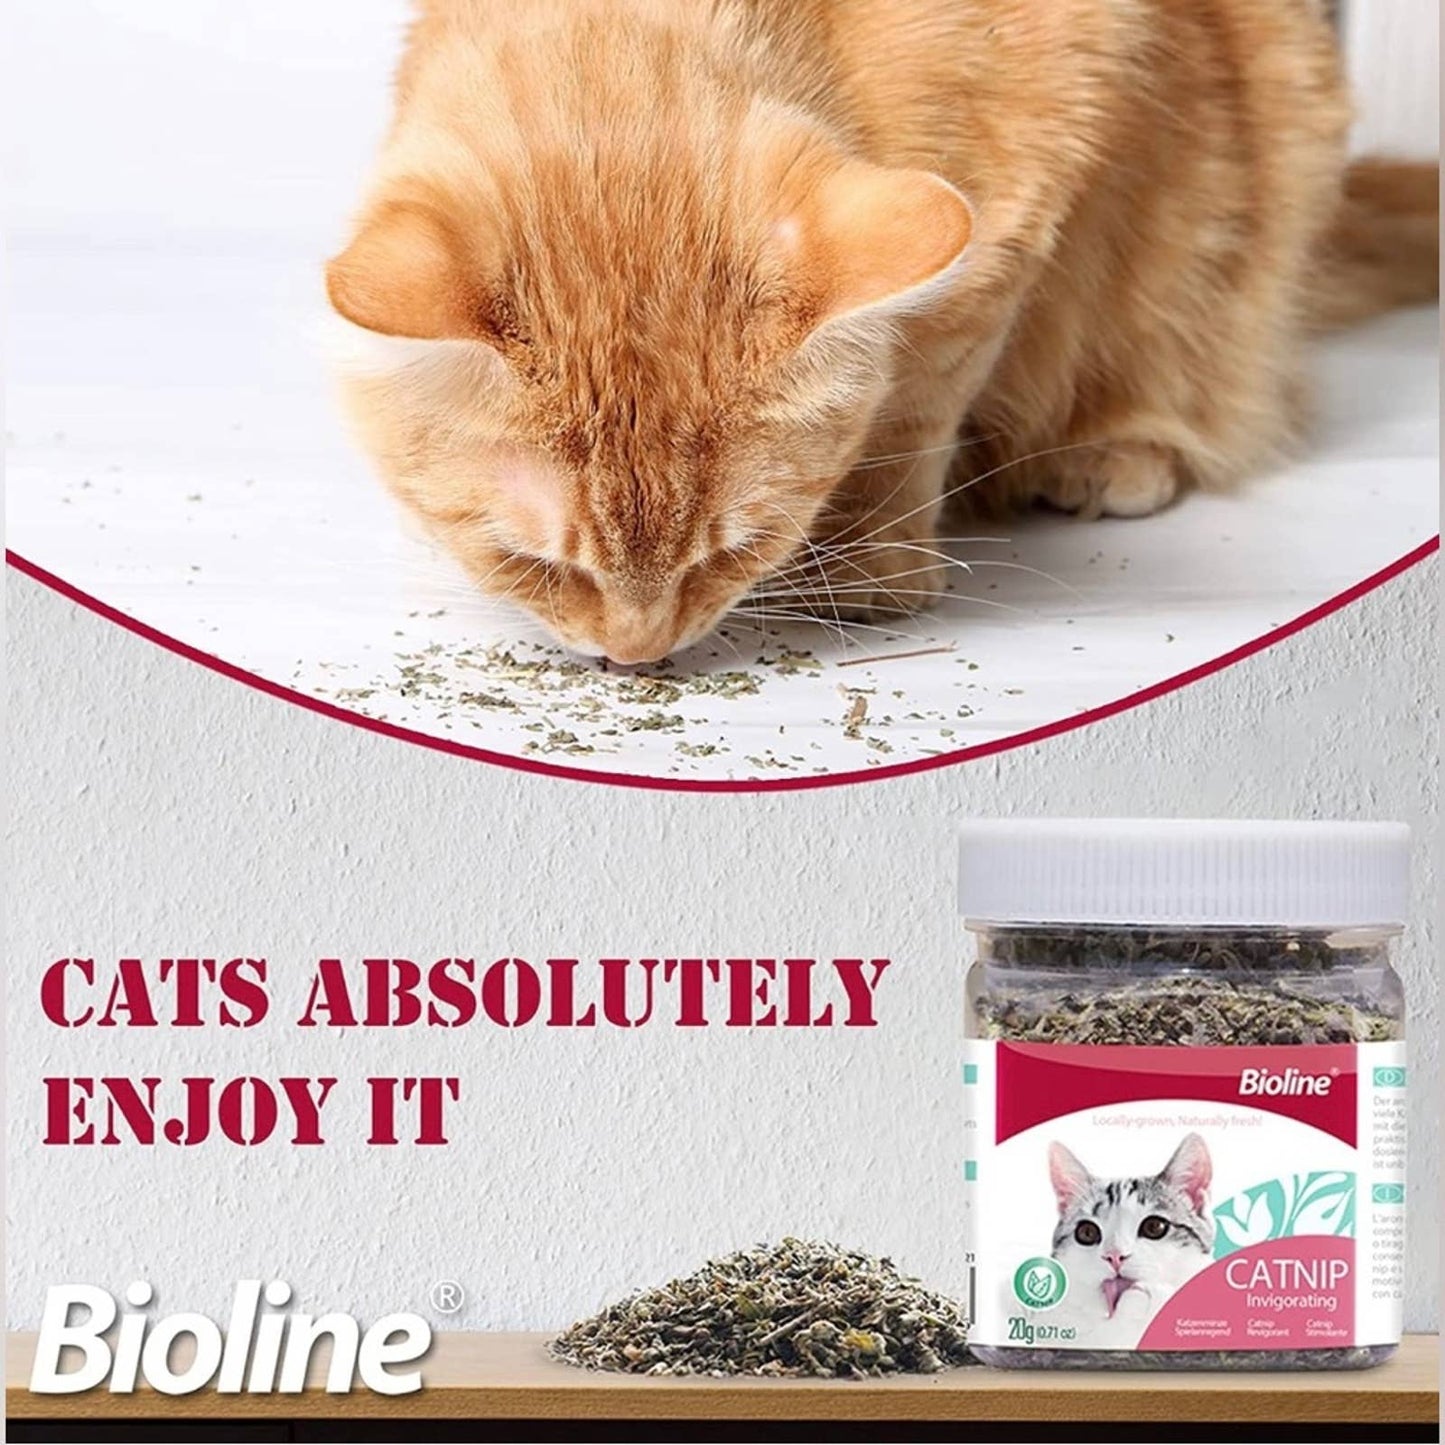 Bioline Catnip Organic Premium Potent Catnip Blend Safe for Cats Use on Cat Toys